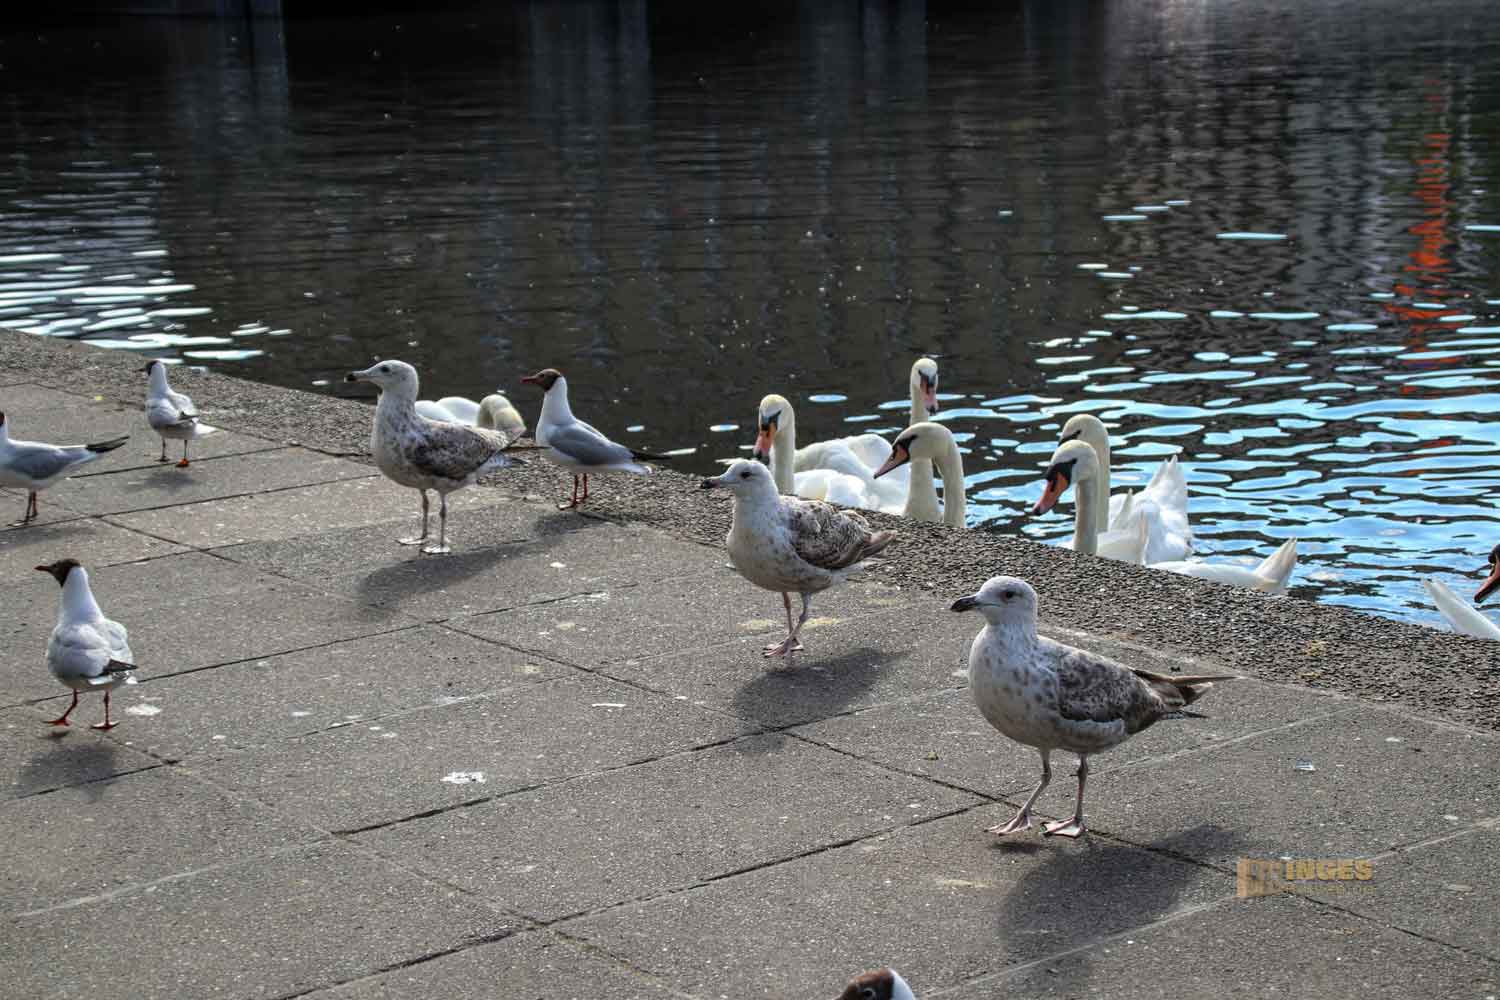 Fütterung der Wasservögel an der Binnenalster Hamburg 8045